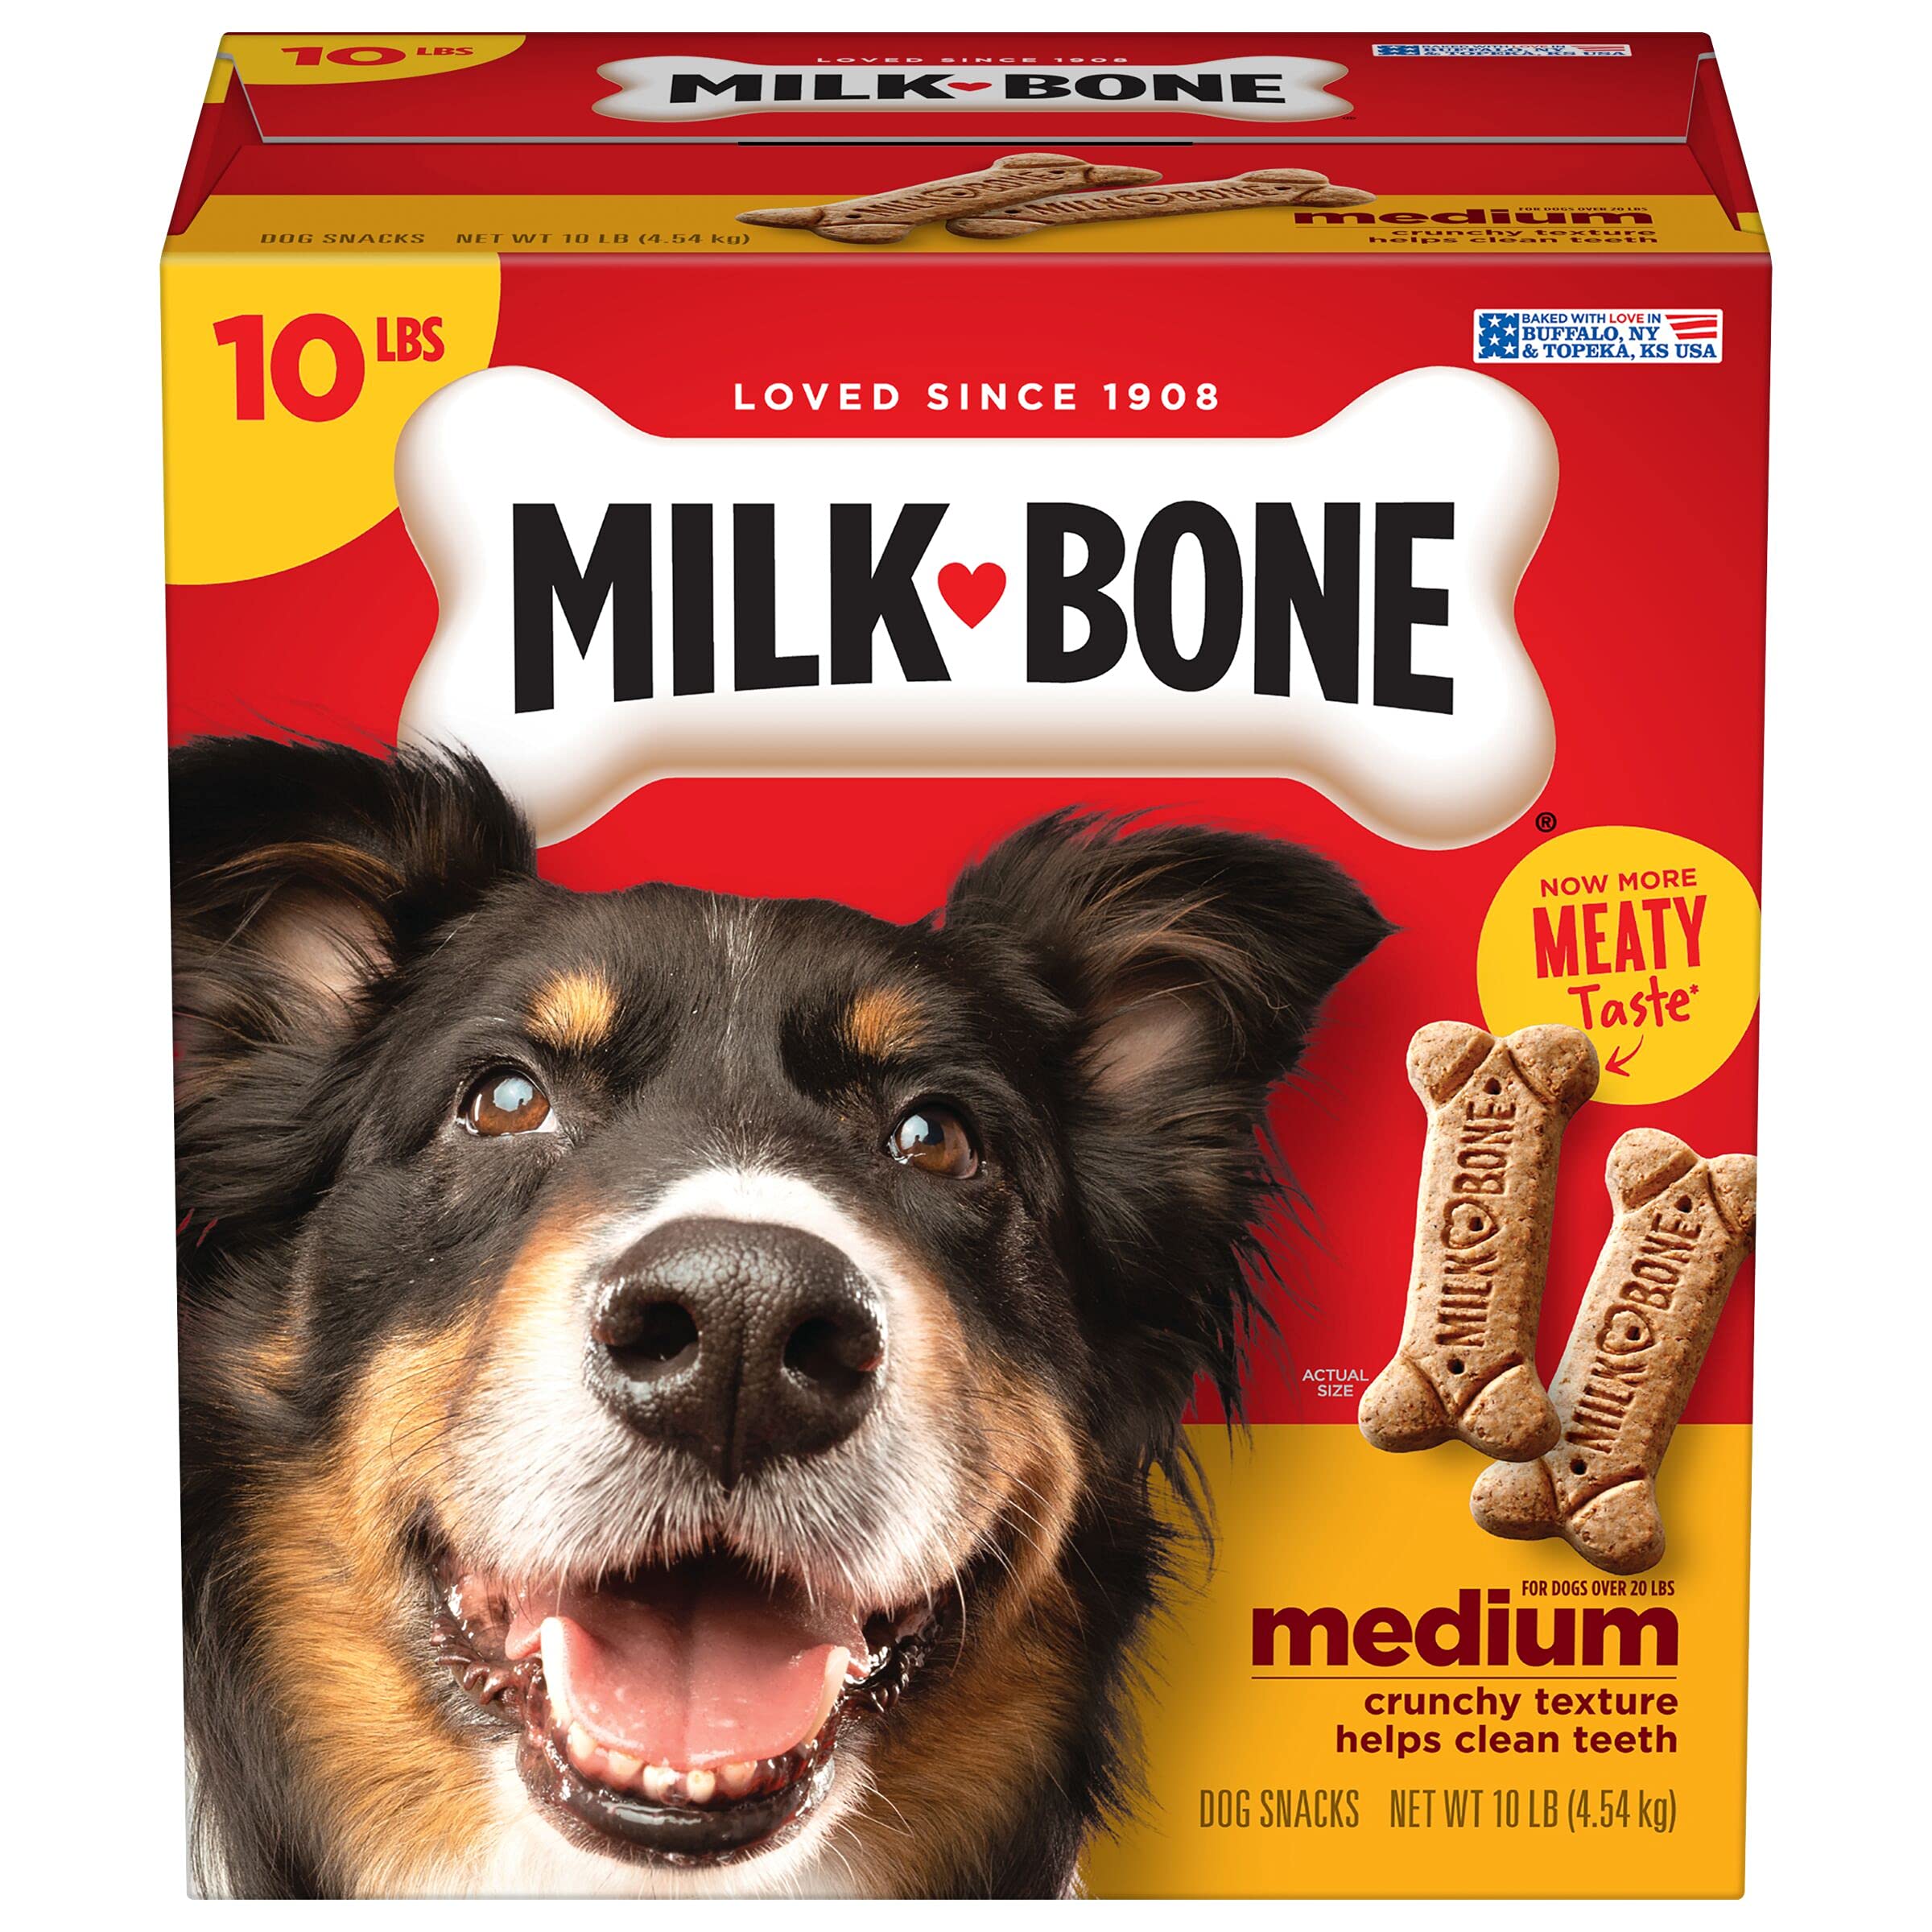 10-lbs Milk-Bone Original Dog Treats Biscuits (Medium Dogs) $10.49 + Free Shipping w/ Prime or on $35+